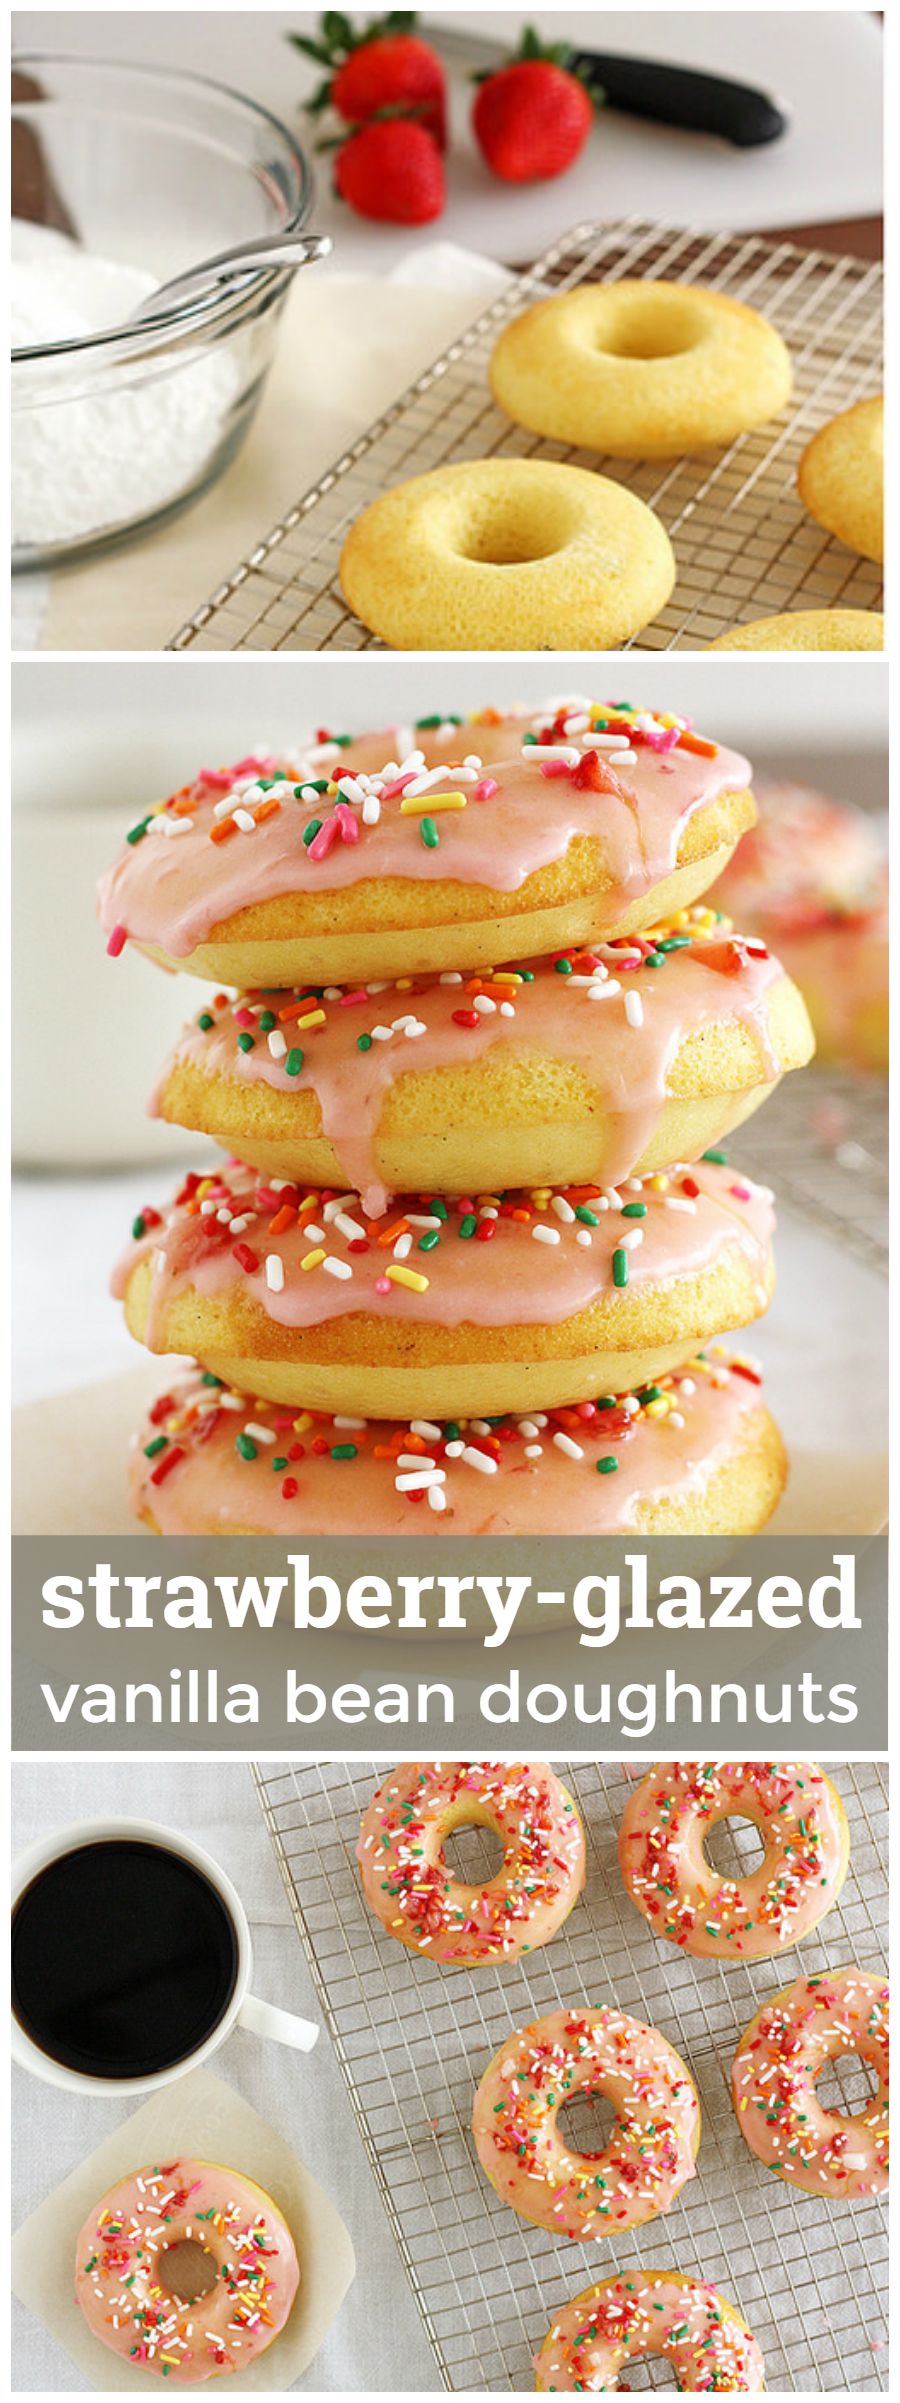 Strawberry Glazed Vanilla Bean Doughnuts -- Baked doughnuts with a sprinkles-topped glaze, better than anything store-bought! girlversusdough.com @girlversusdough